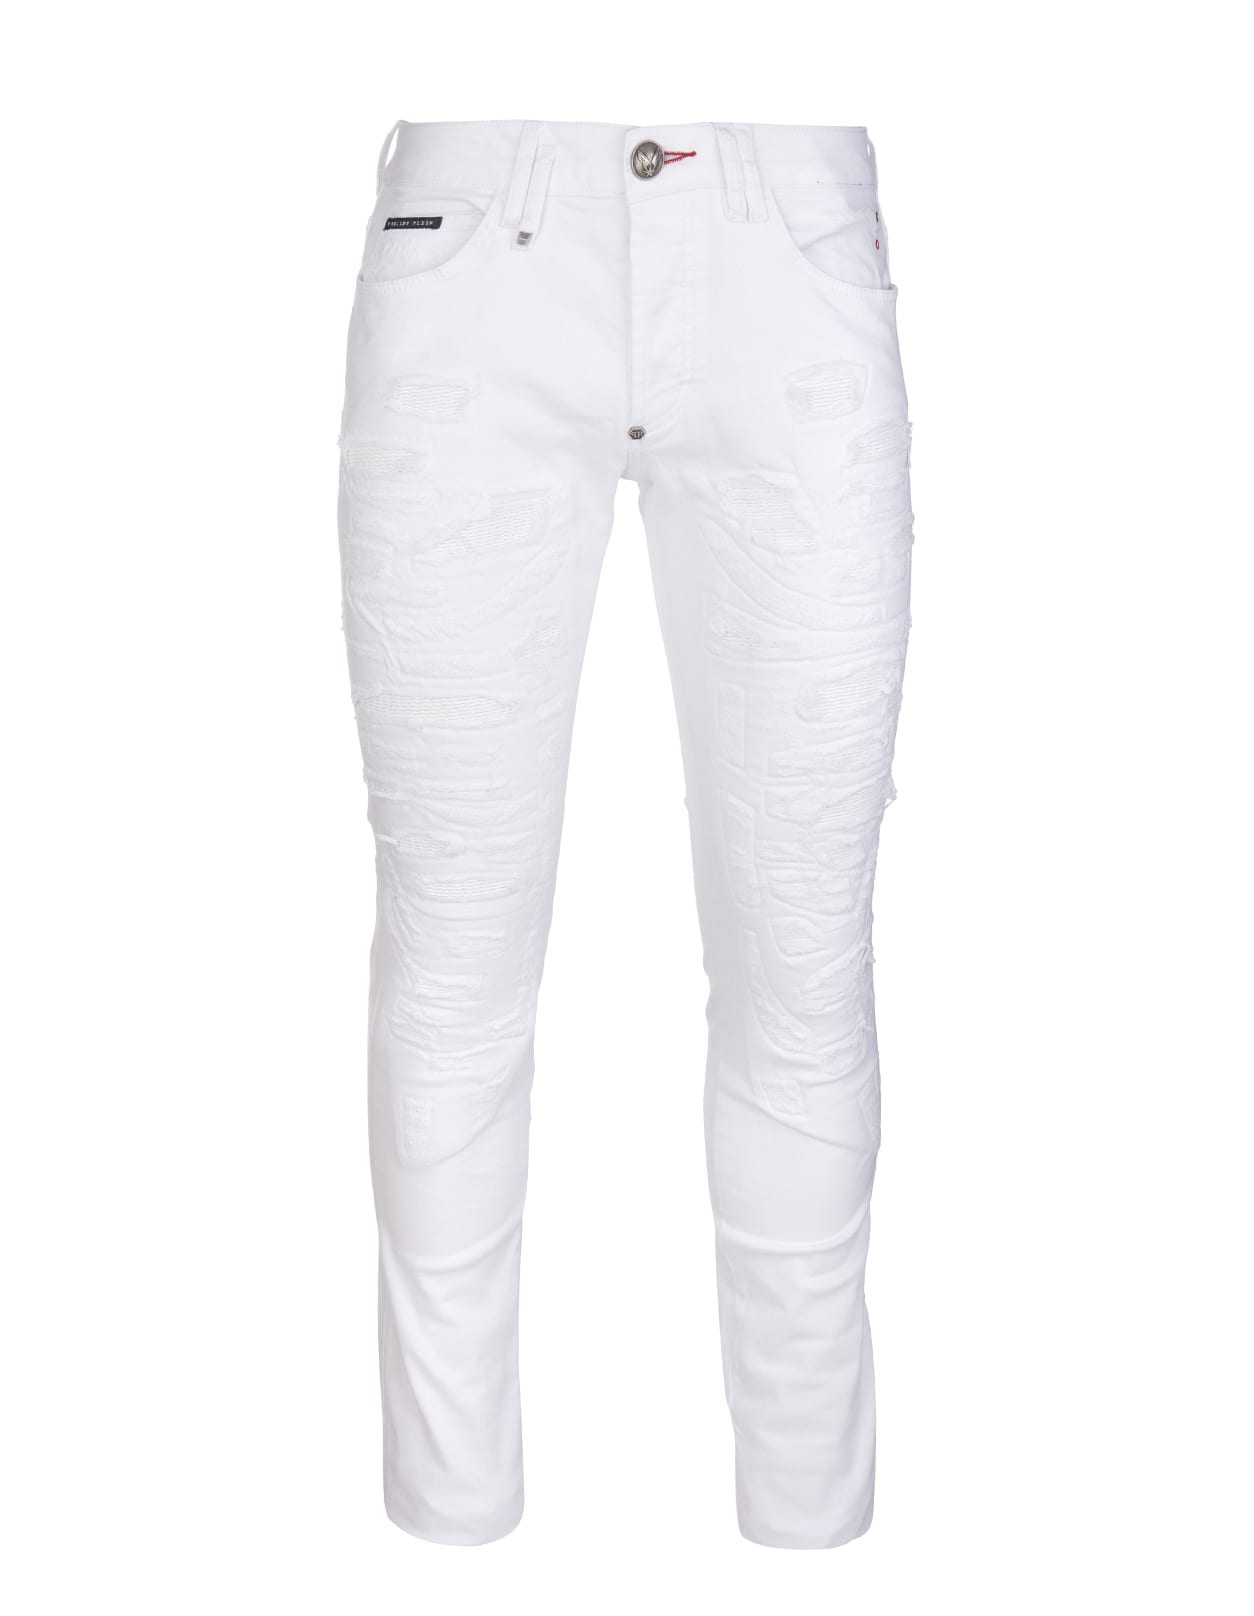 Philipp Plein Man Super Straight Cut Jeans In White Stretch Denim With Rips